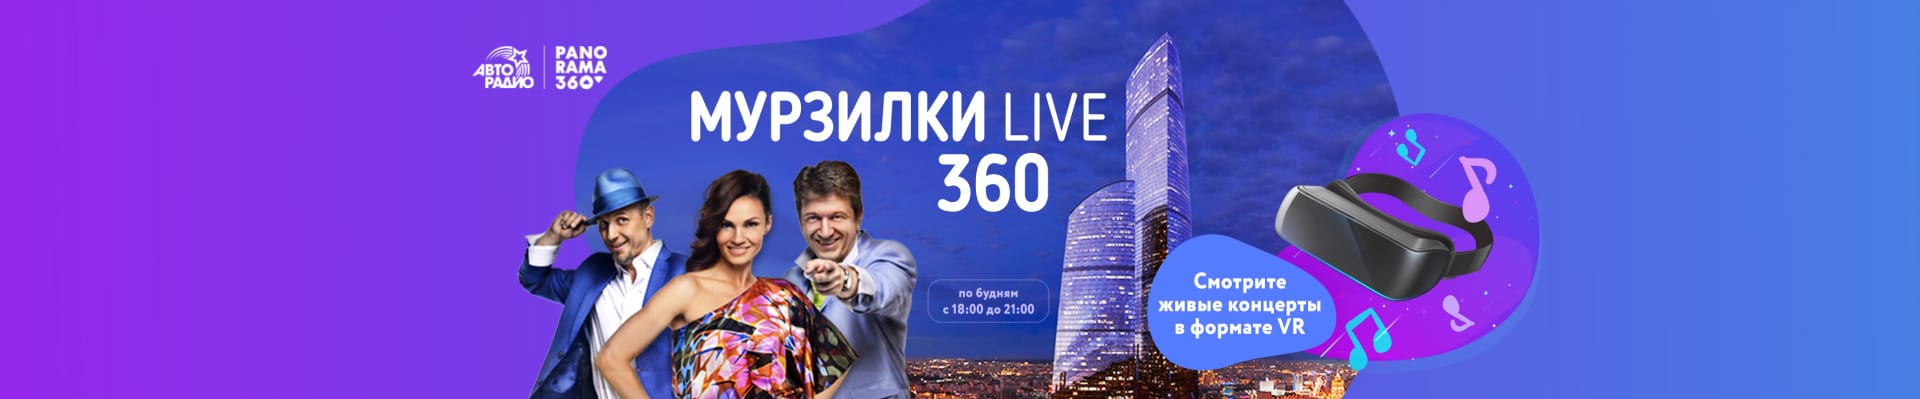 Баннер акции «Мурзилки 360 live» на Авторадио. В эфире по будням с 18:00 до 21:00.